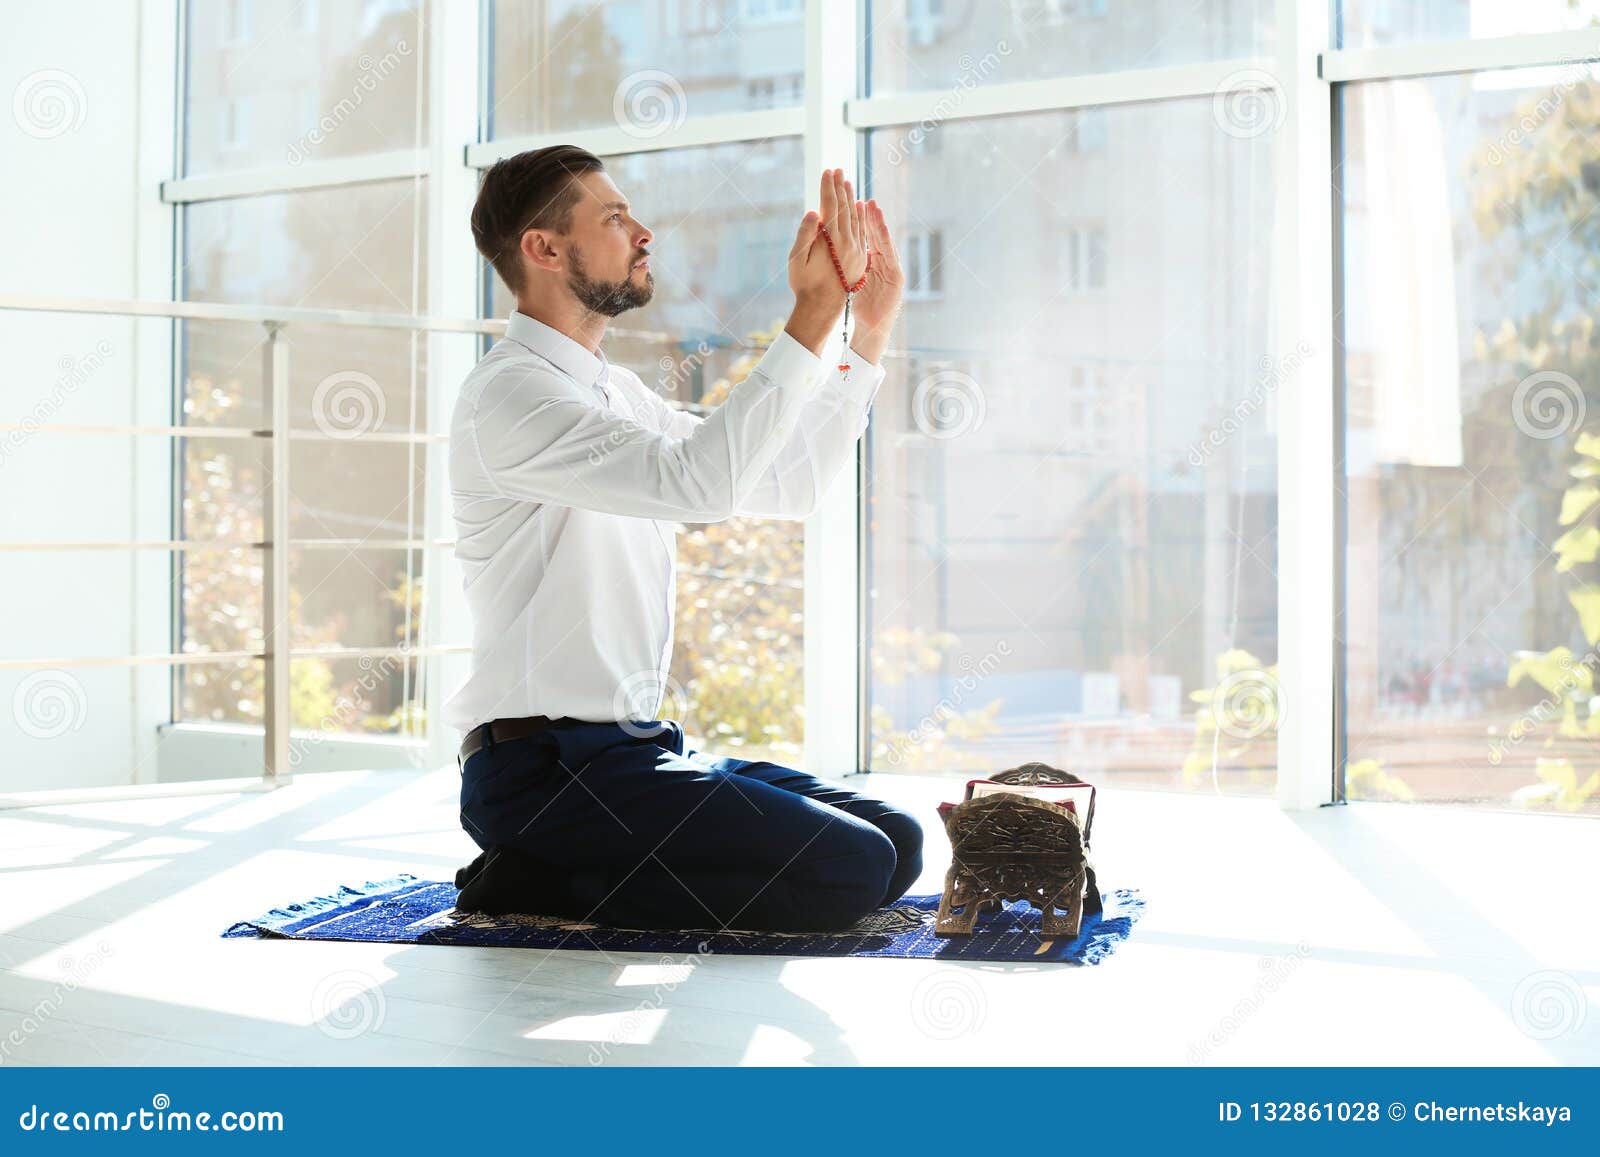 Muslim Man in Suit Praying on Rug Stock Photo - Image of caucasian ...